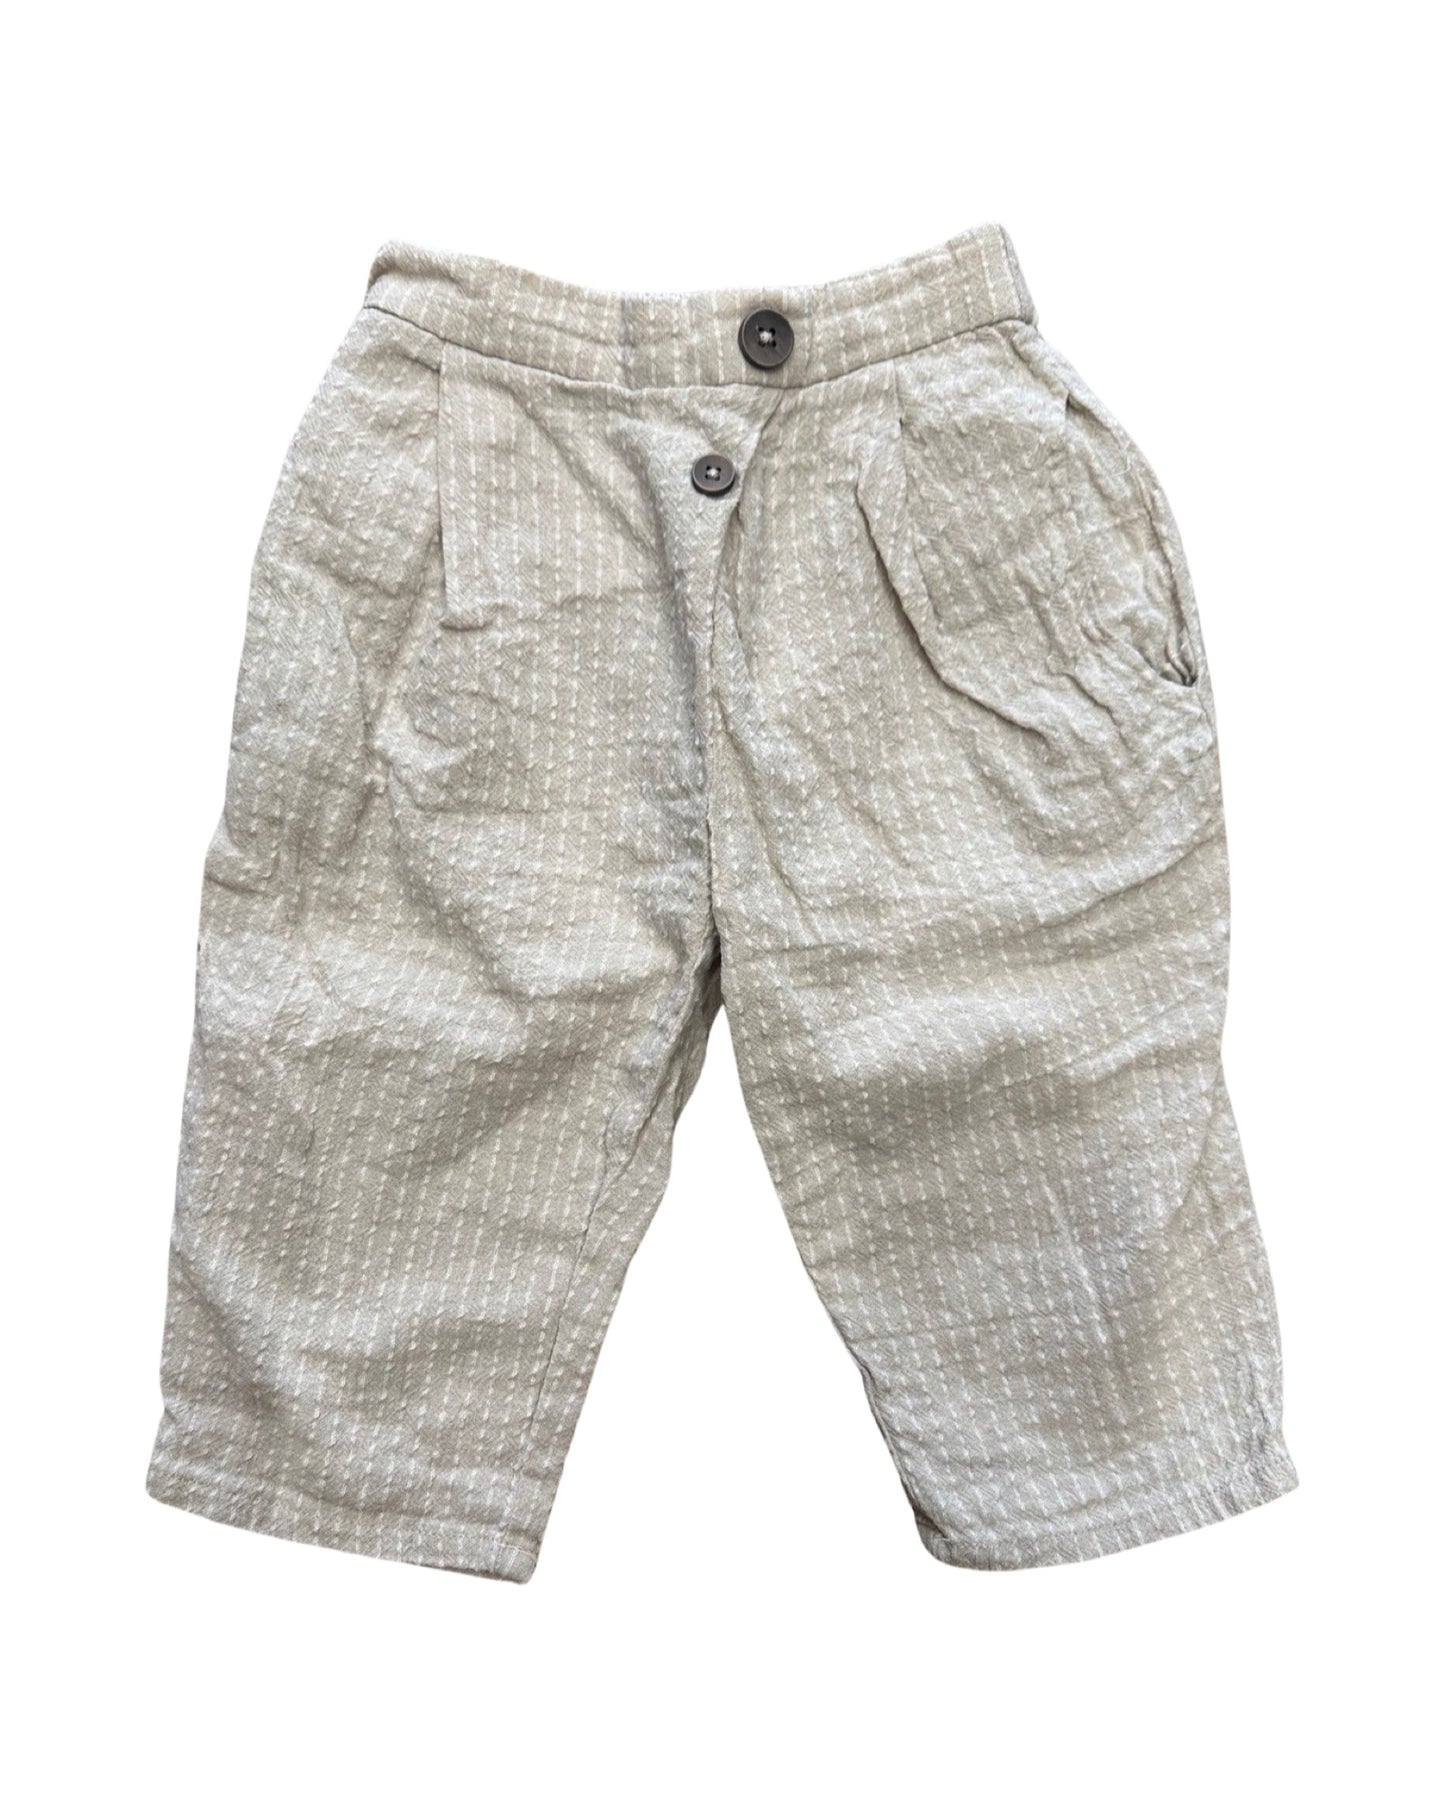 Baby Zara cream textured cotton trousers (12-18mths)